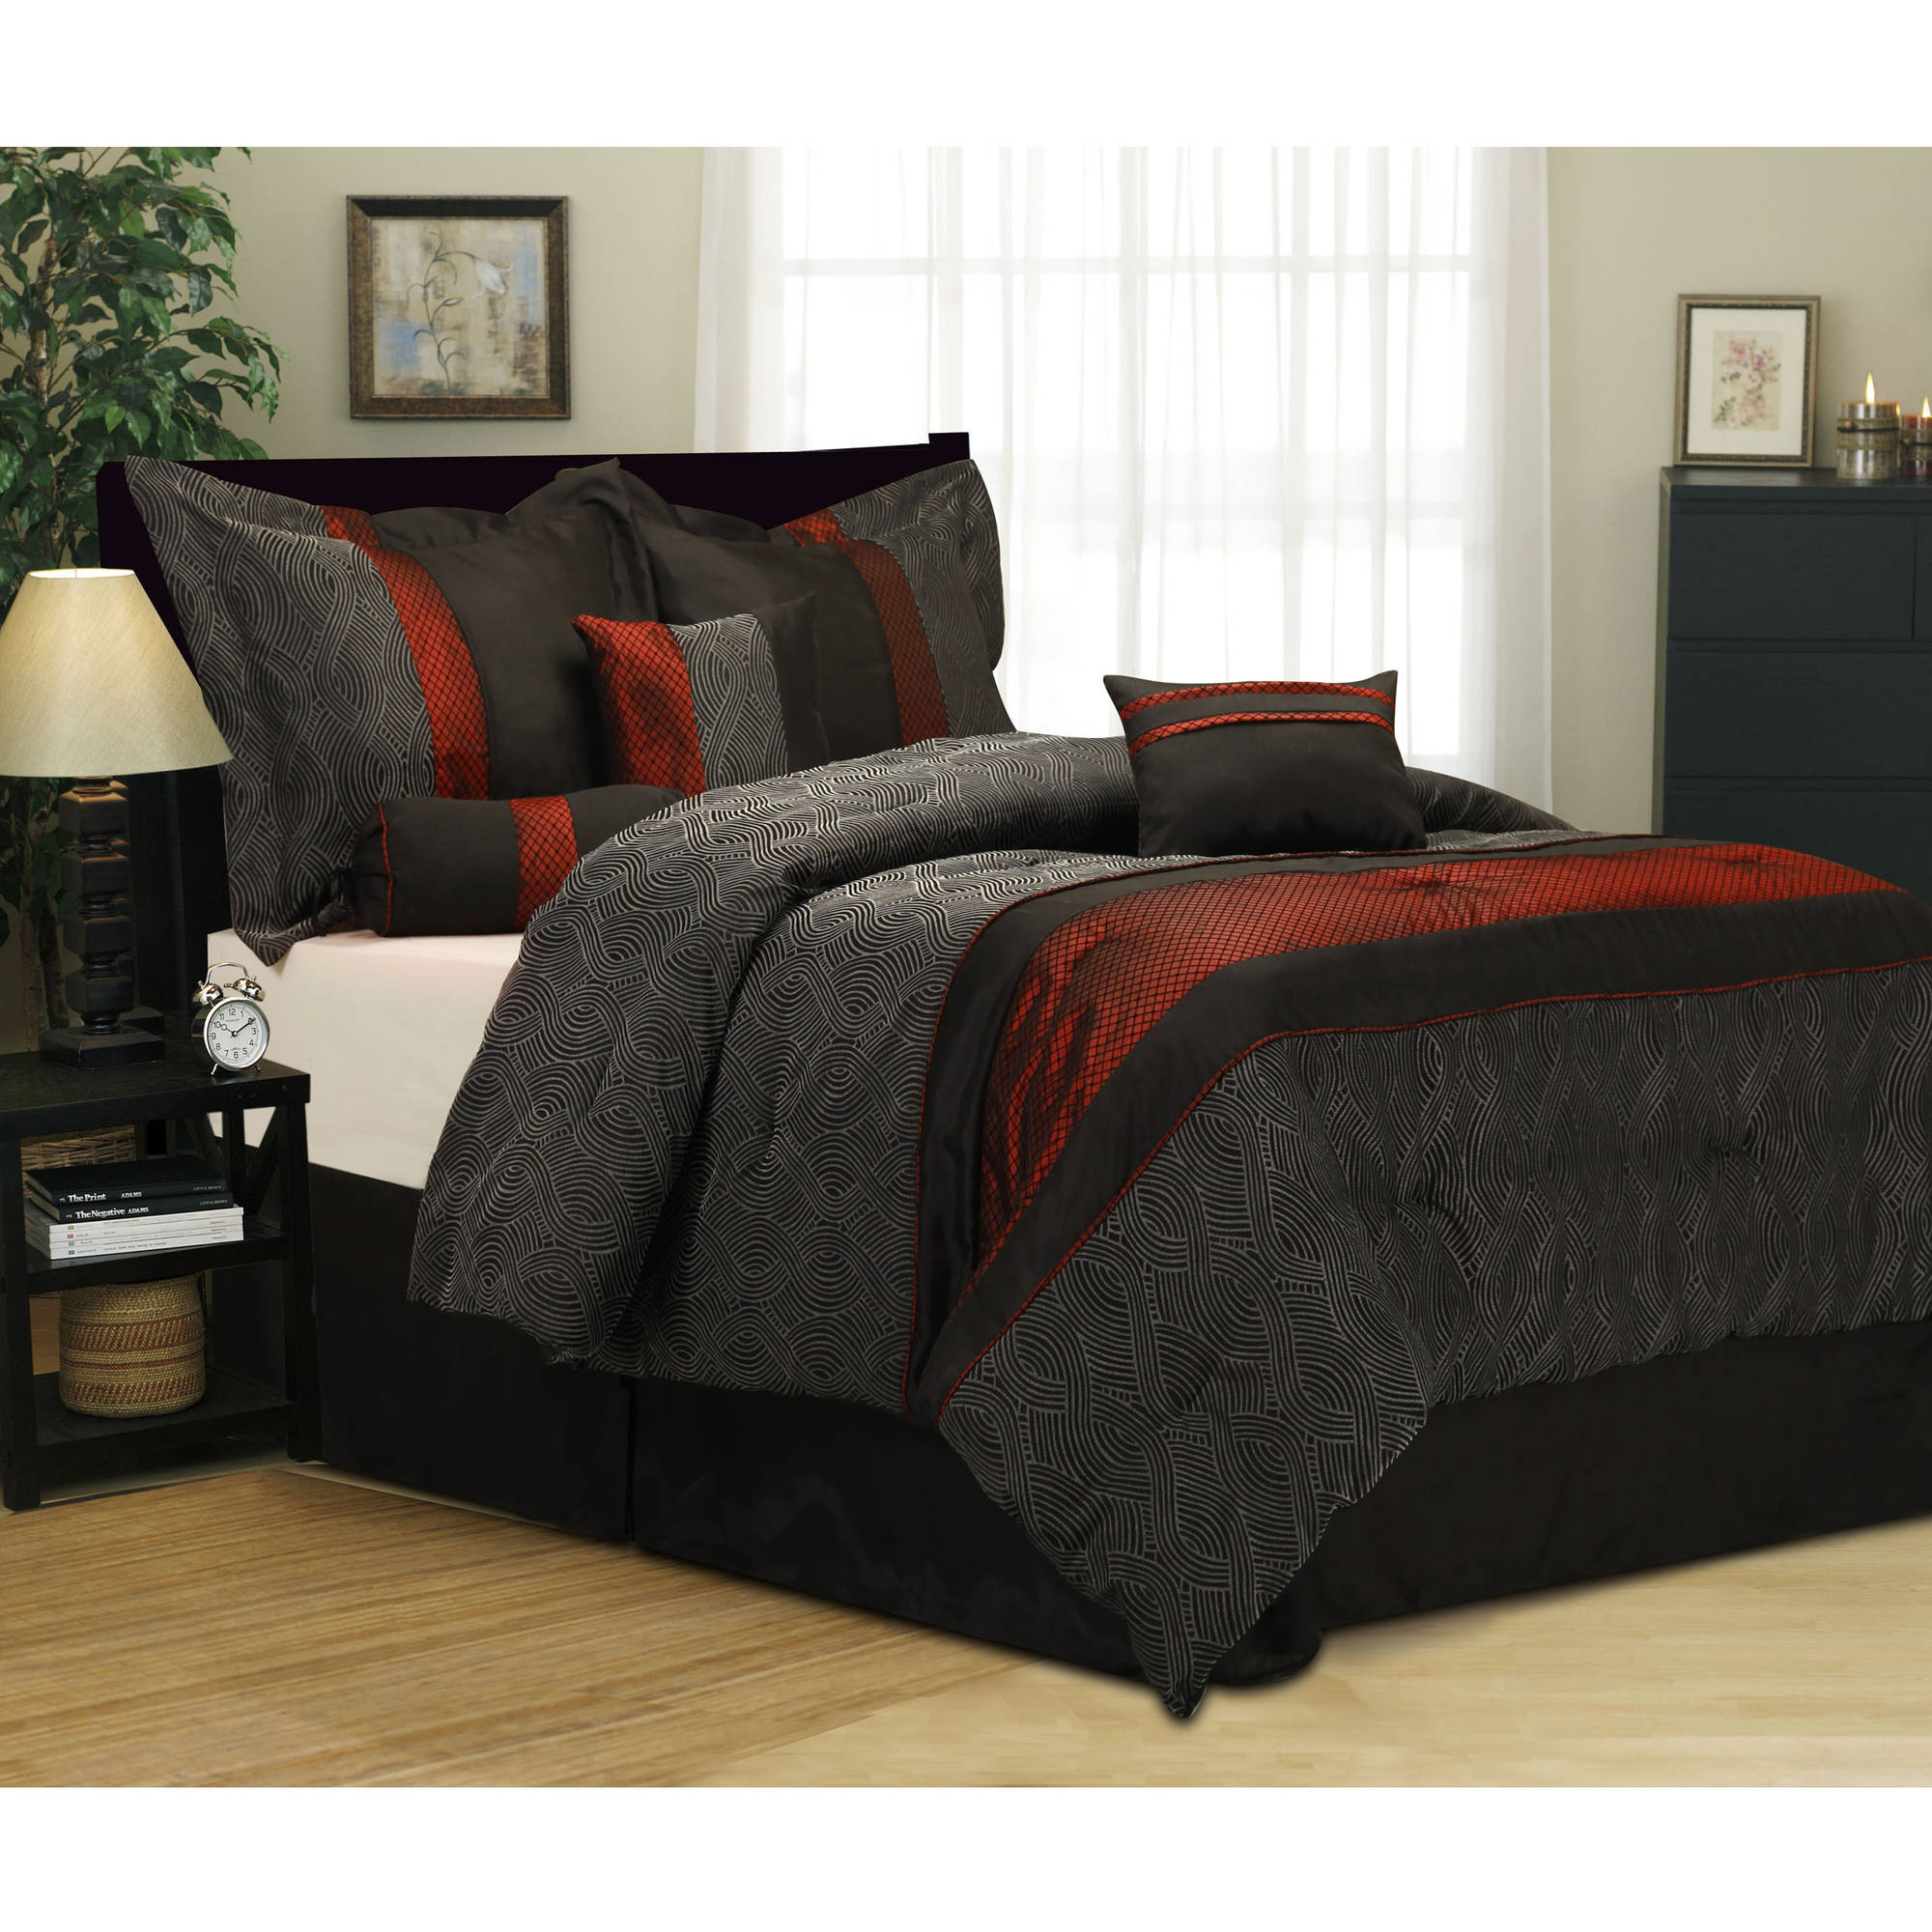 7 Piece Bedding Comforter Set QUEEN SIZE BLACK/RED SHAMS PILLOWS 